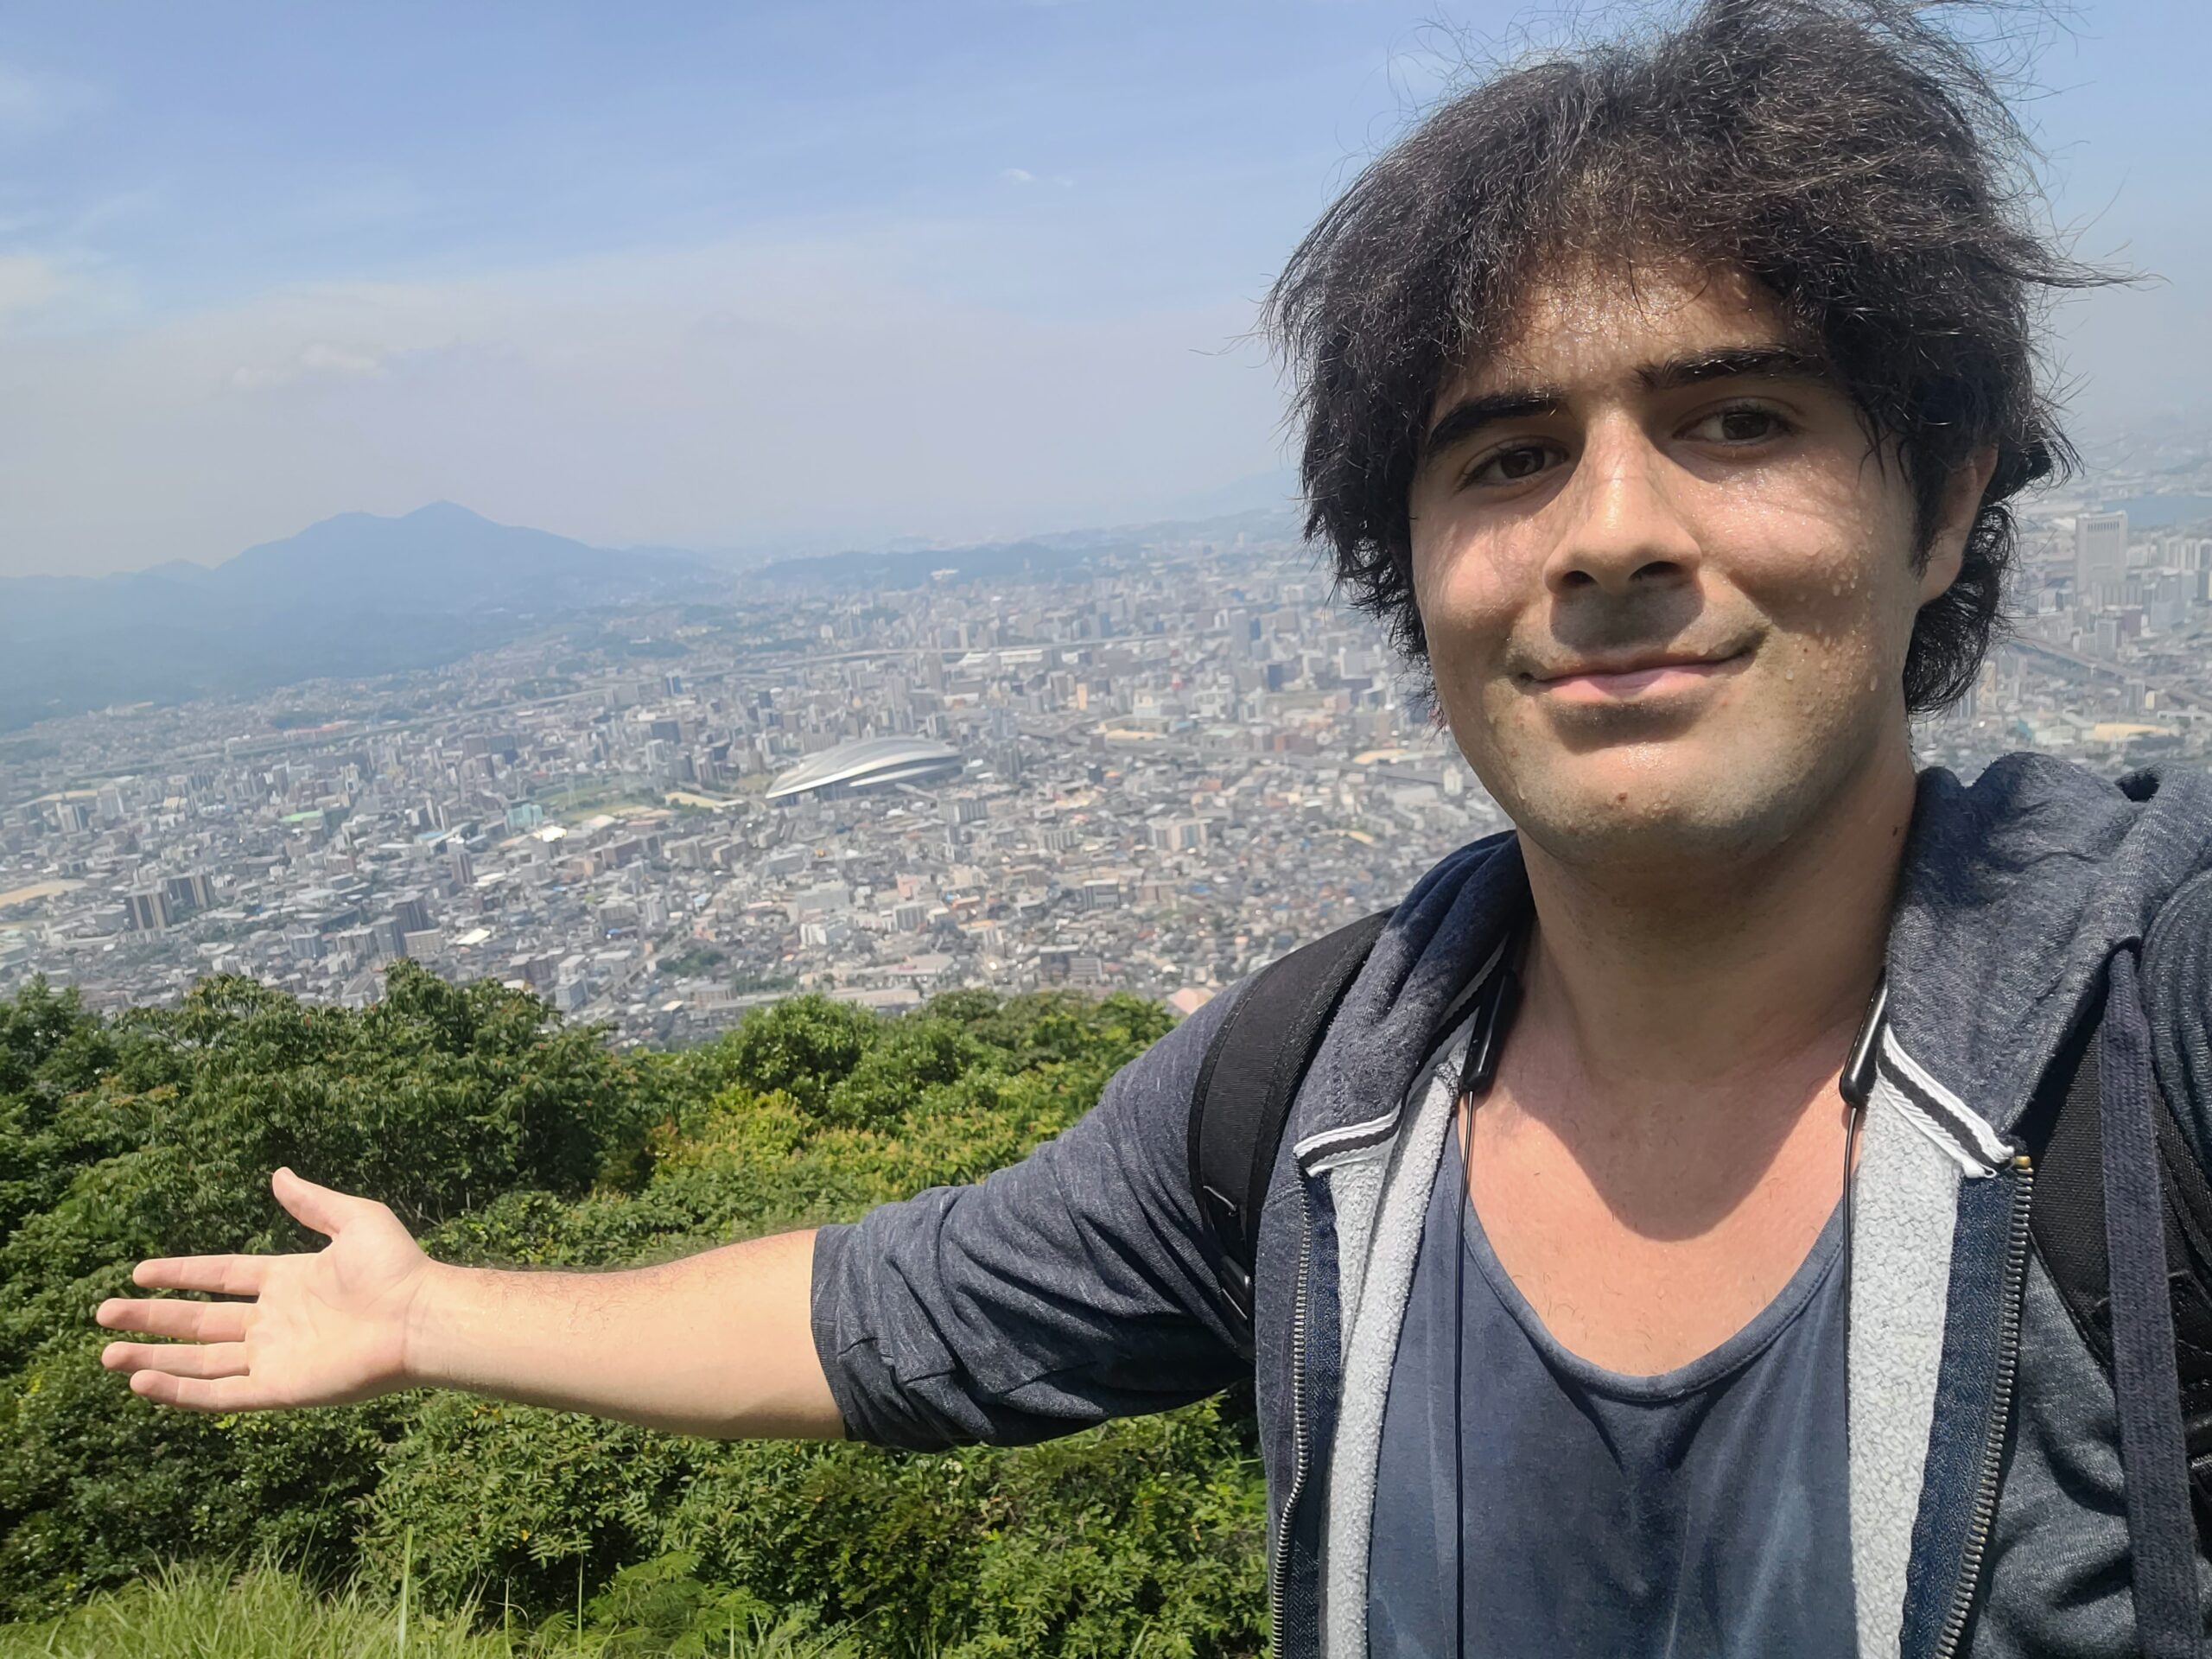 Climbing Mt. Komonji is the best way to appreciate Kitakyushu